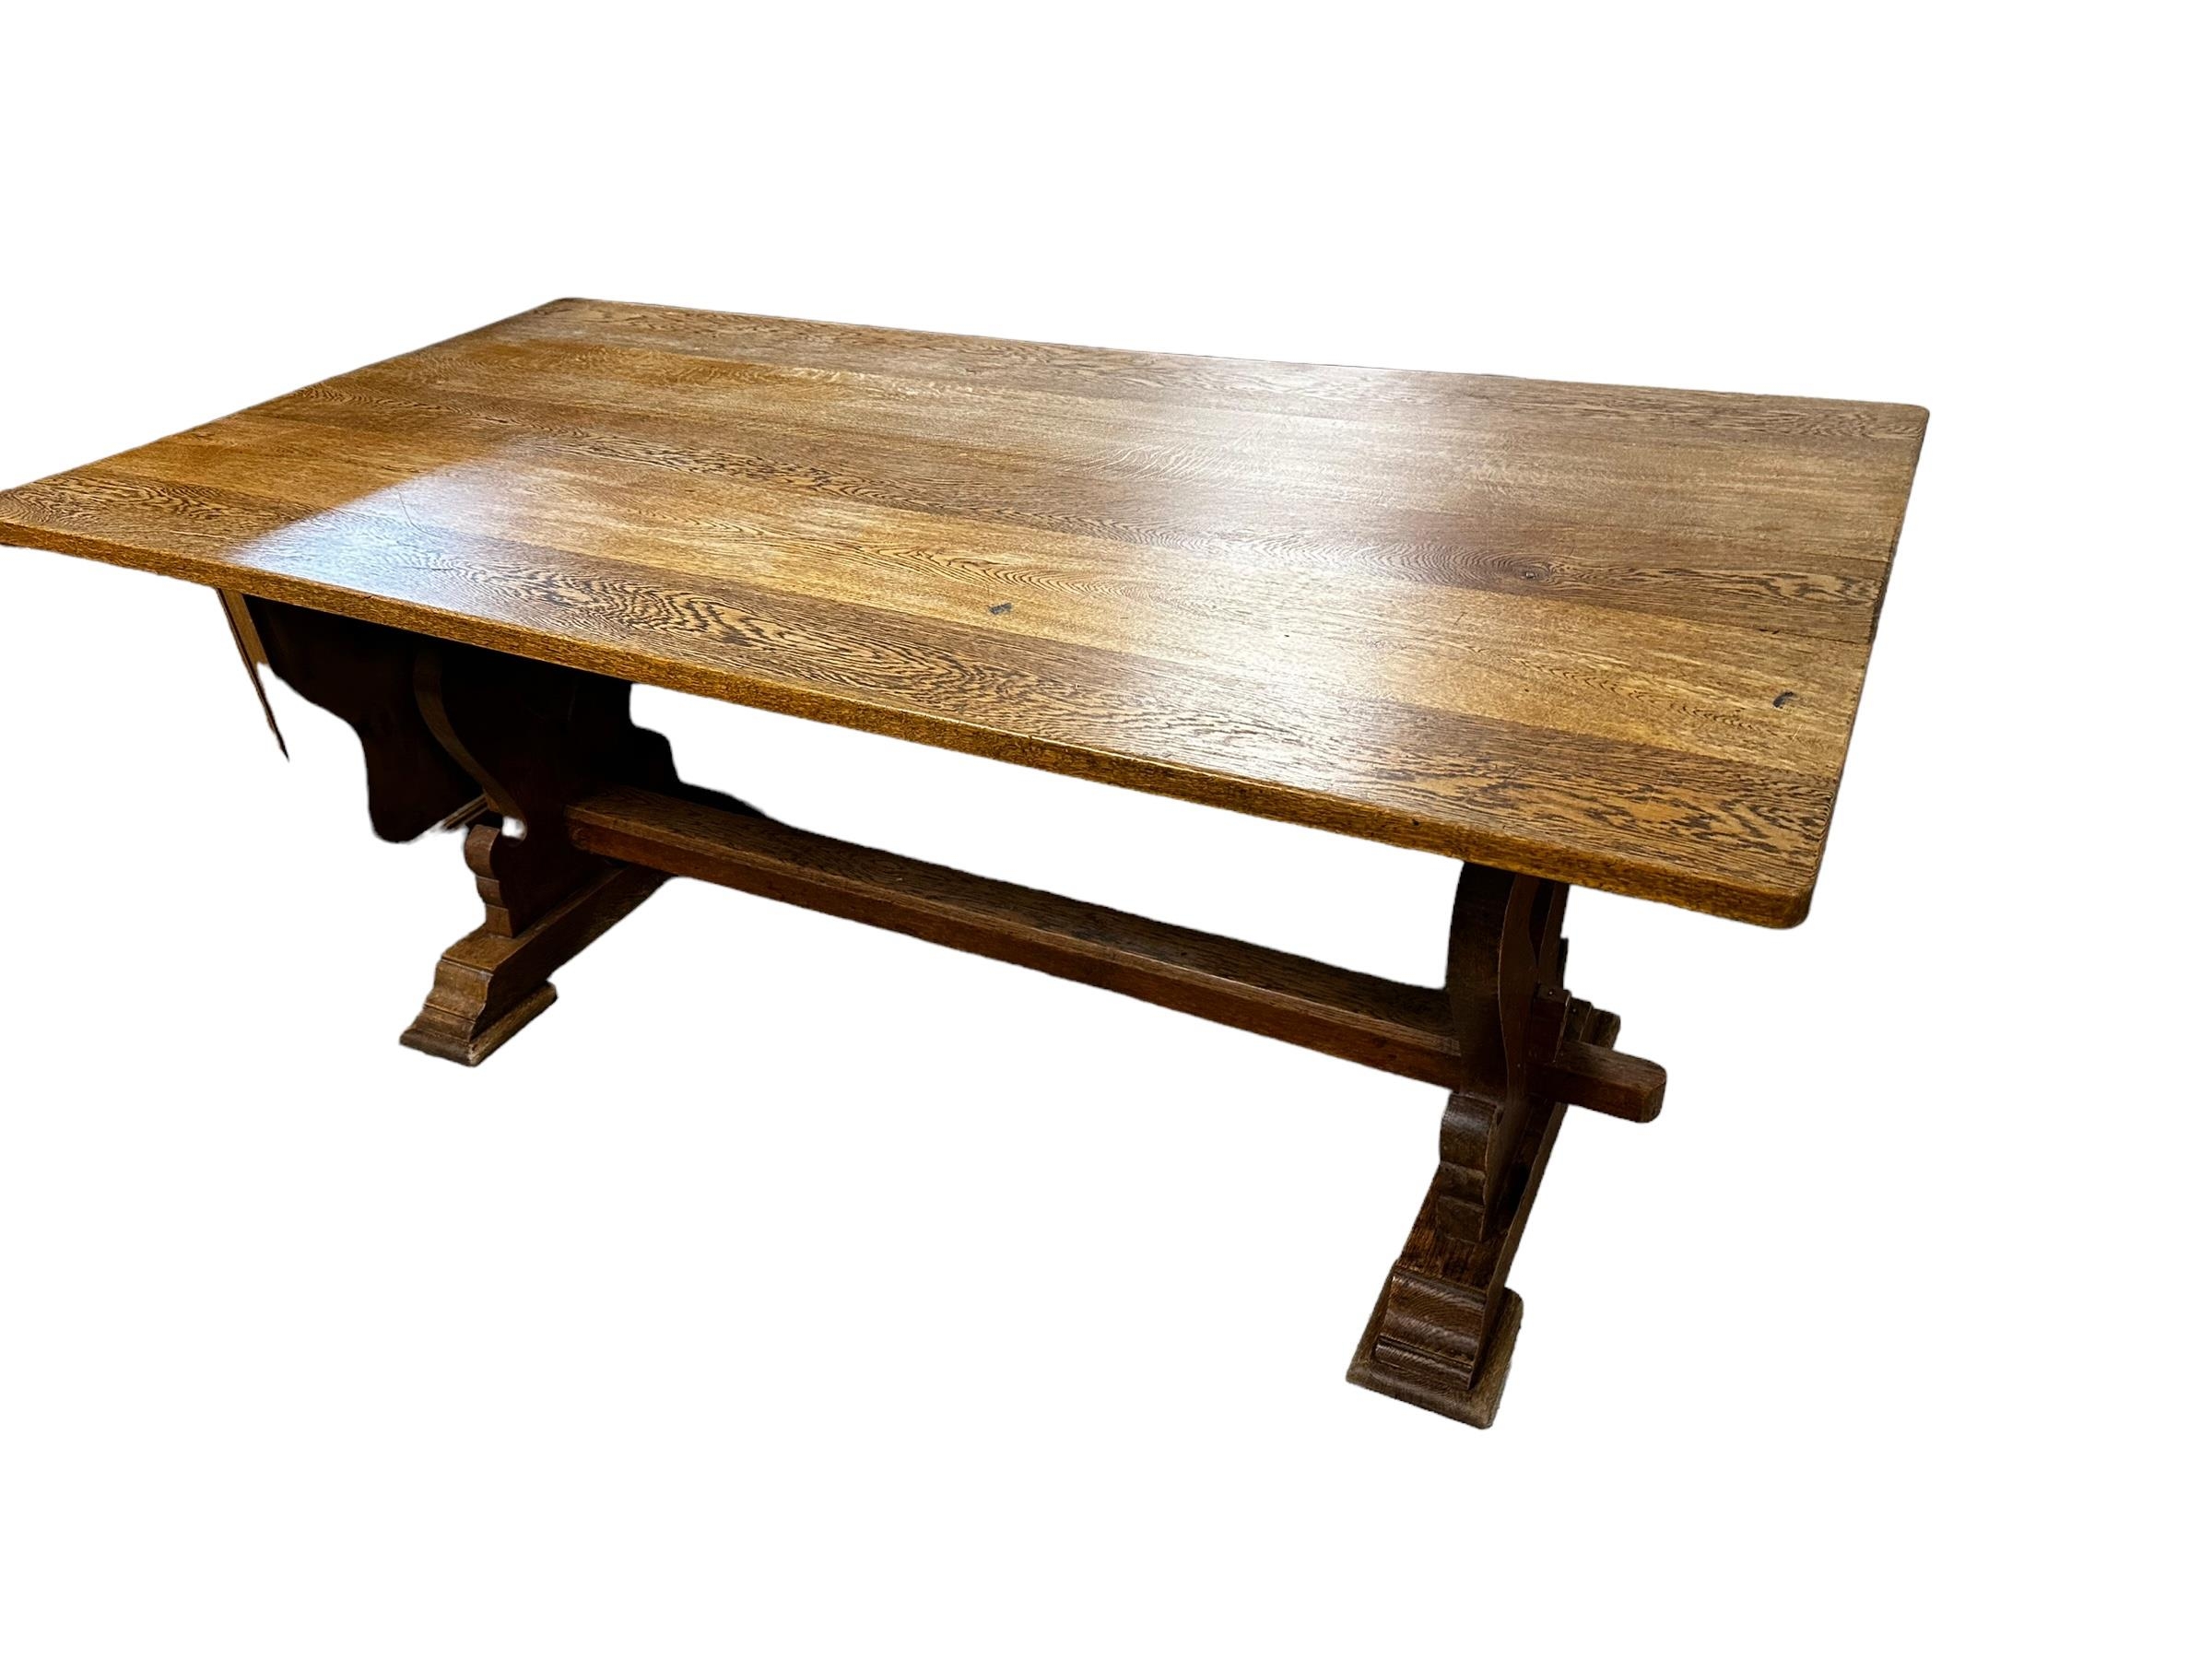 A light oak refectory table 182cm Long x 75cmH x 91cm W